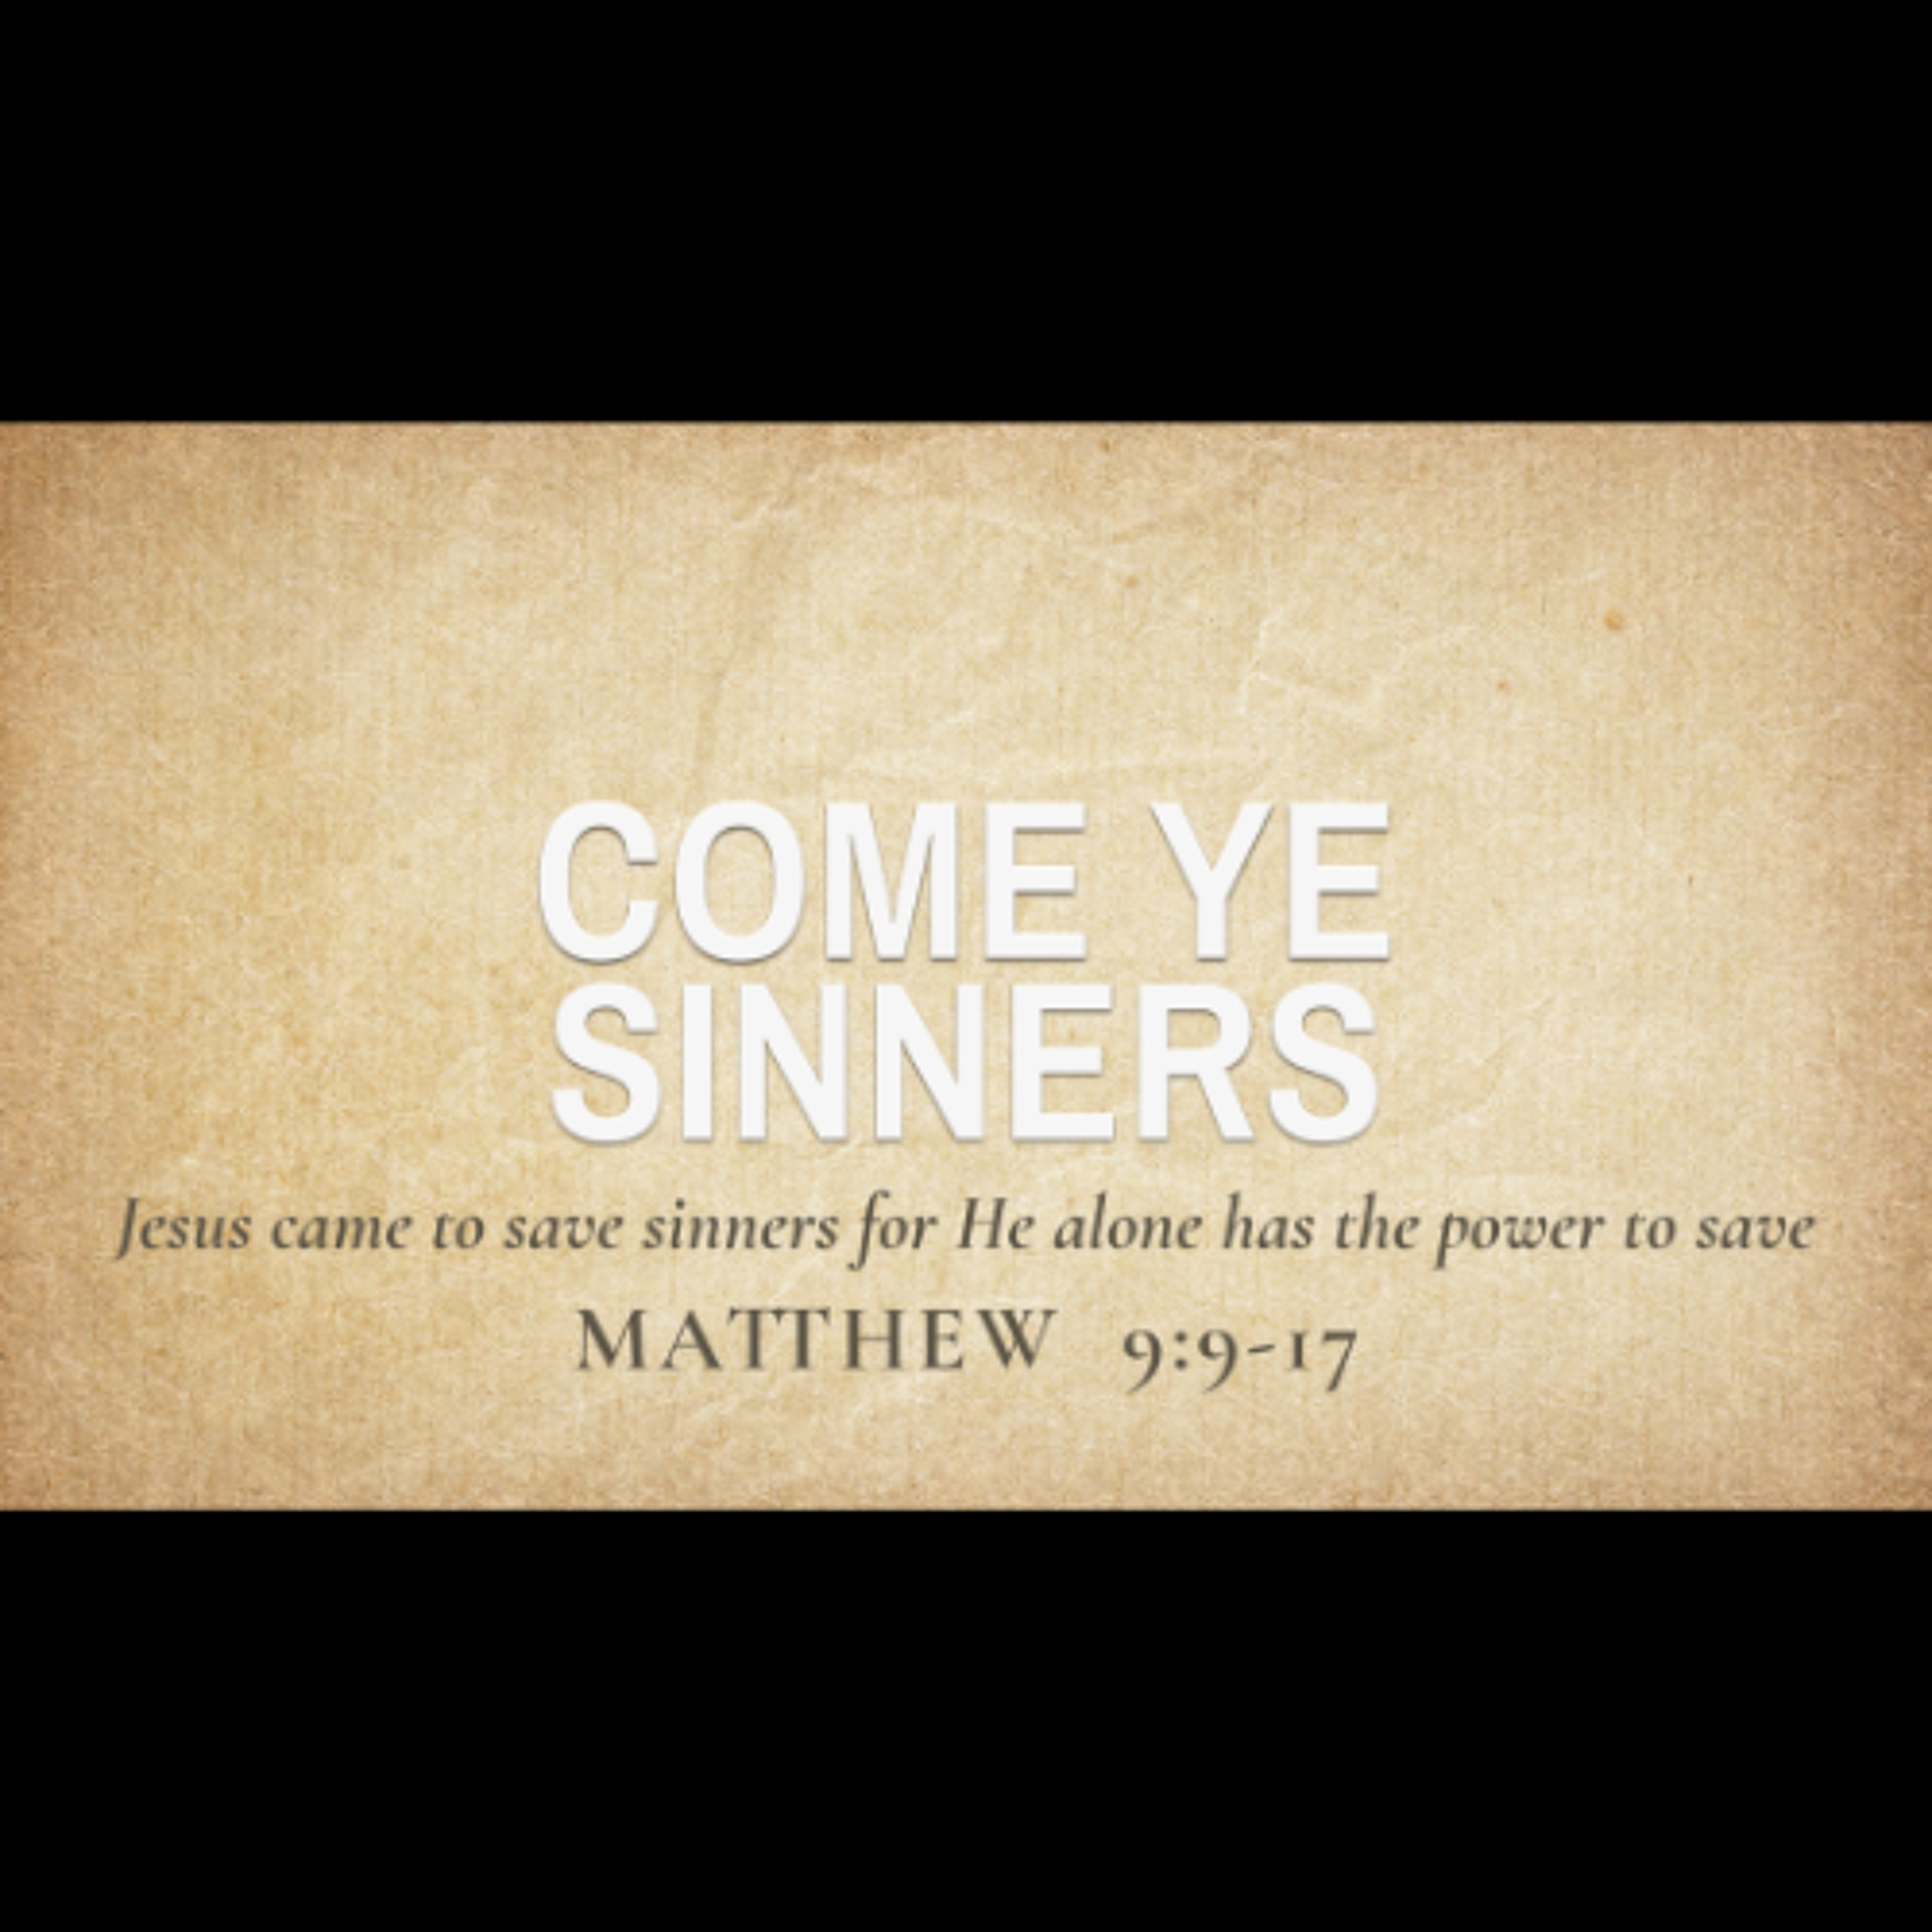 Come Ye Sinners (Matthew 9:9-17)